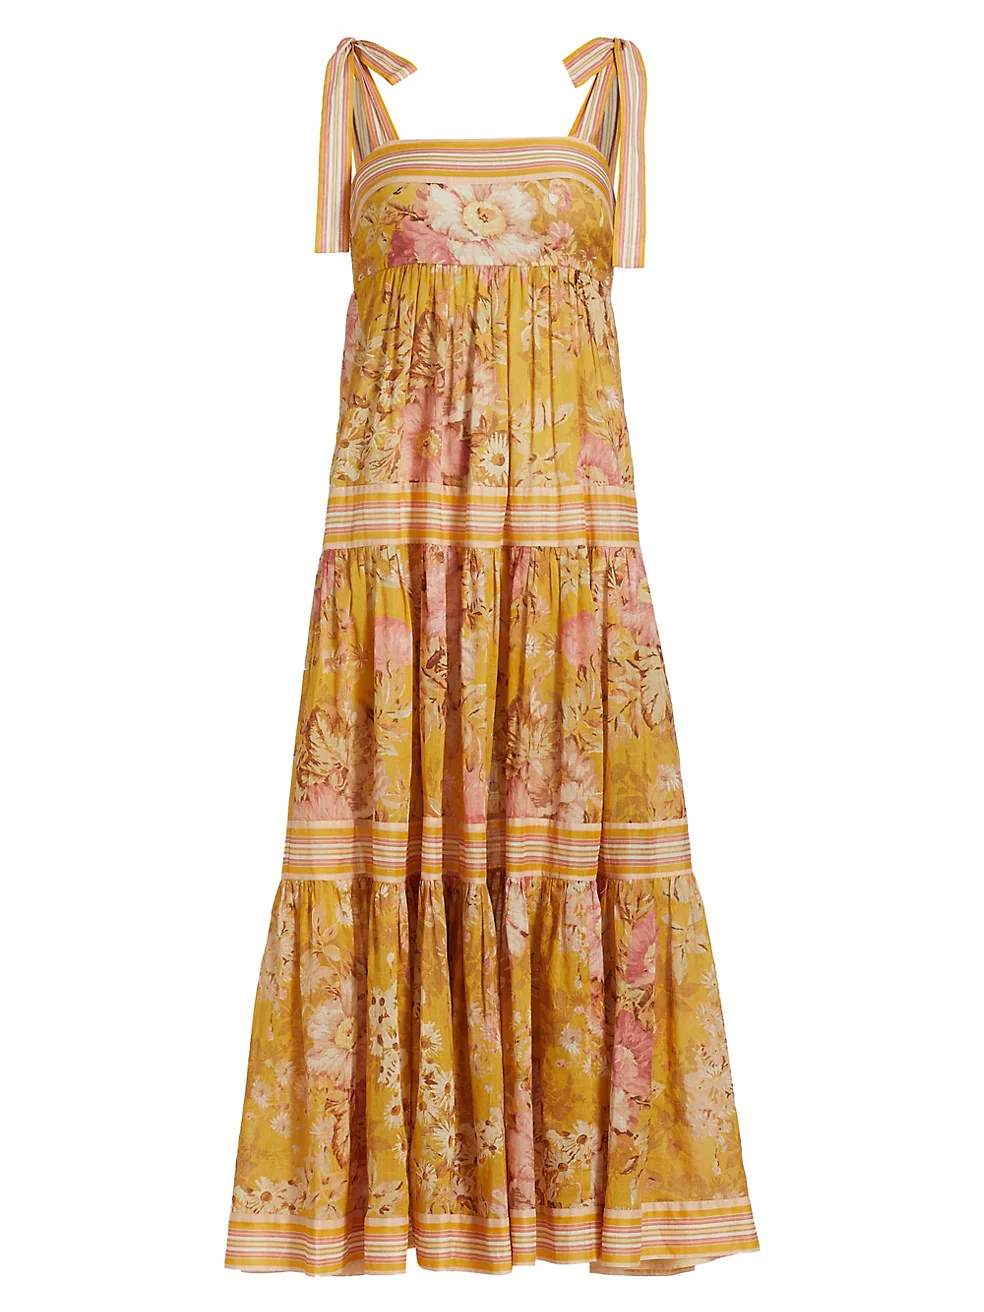 Zimmerman Print Dress- saks fifth avenue - summer dress, maxi dress